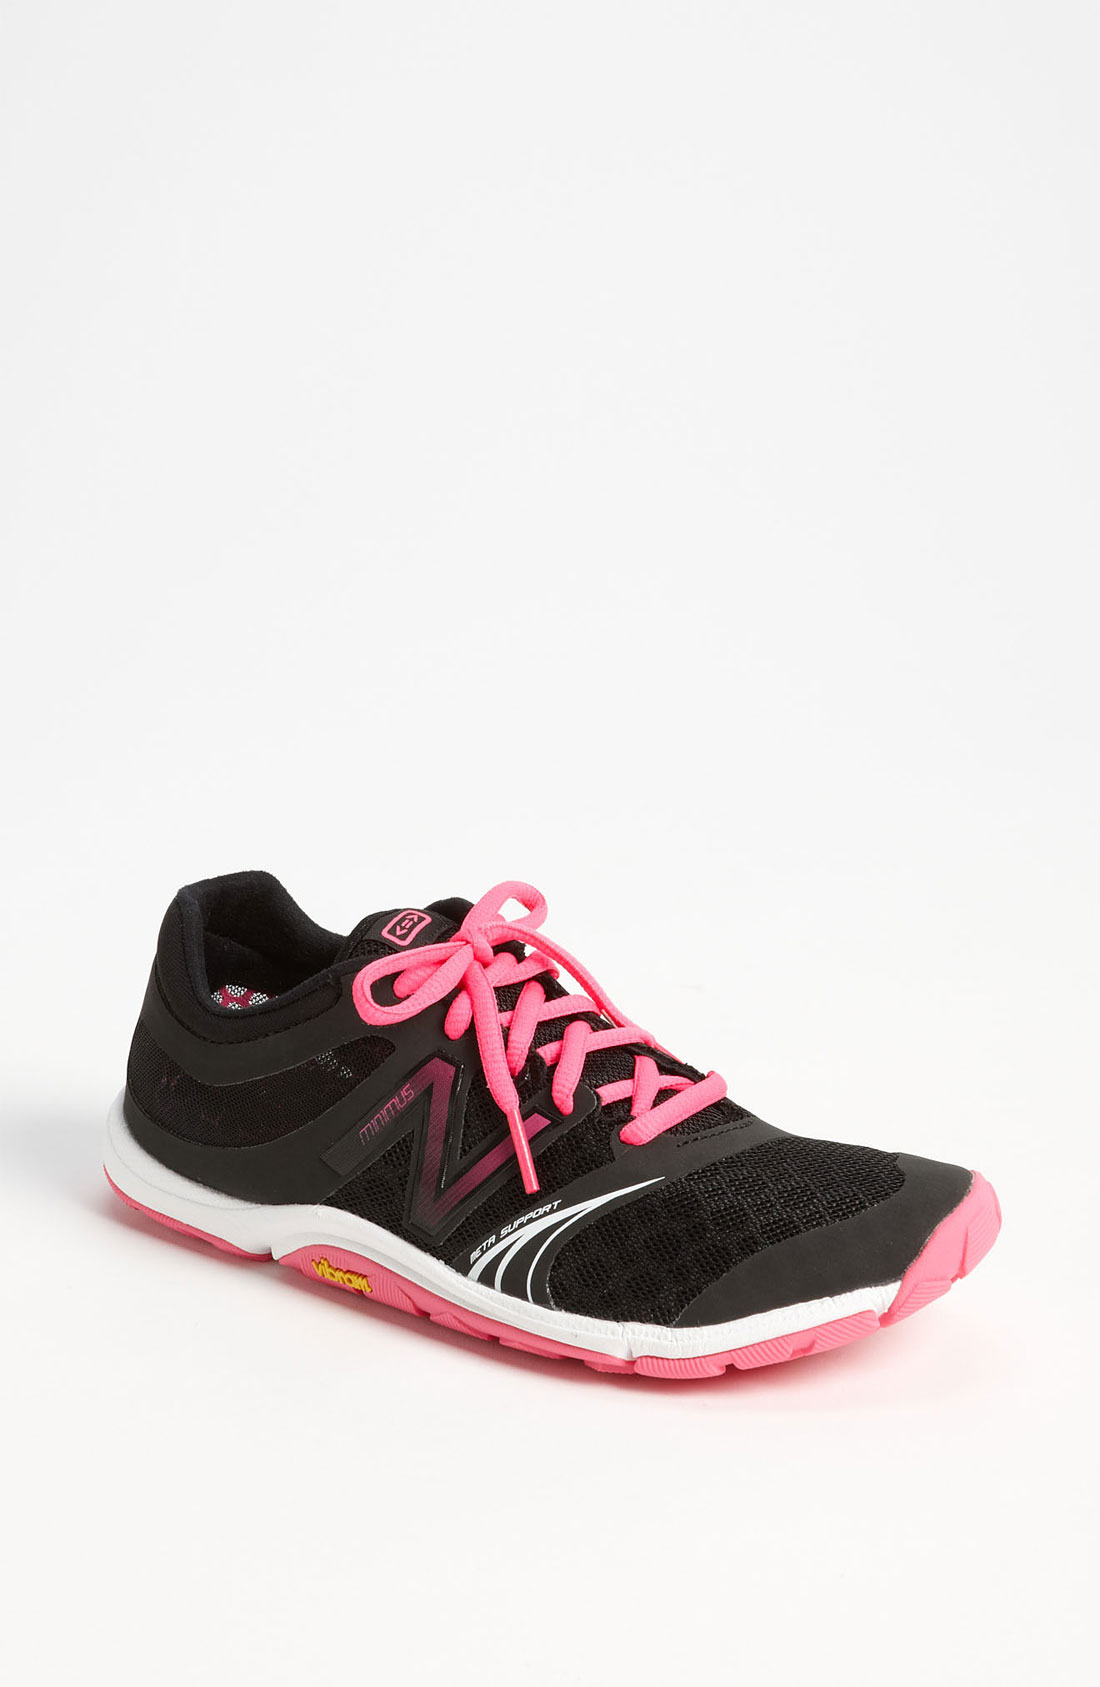 New Balance Minimus 3 Training Shoe Women in Pink (black) | Lyst